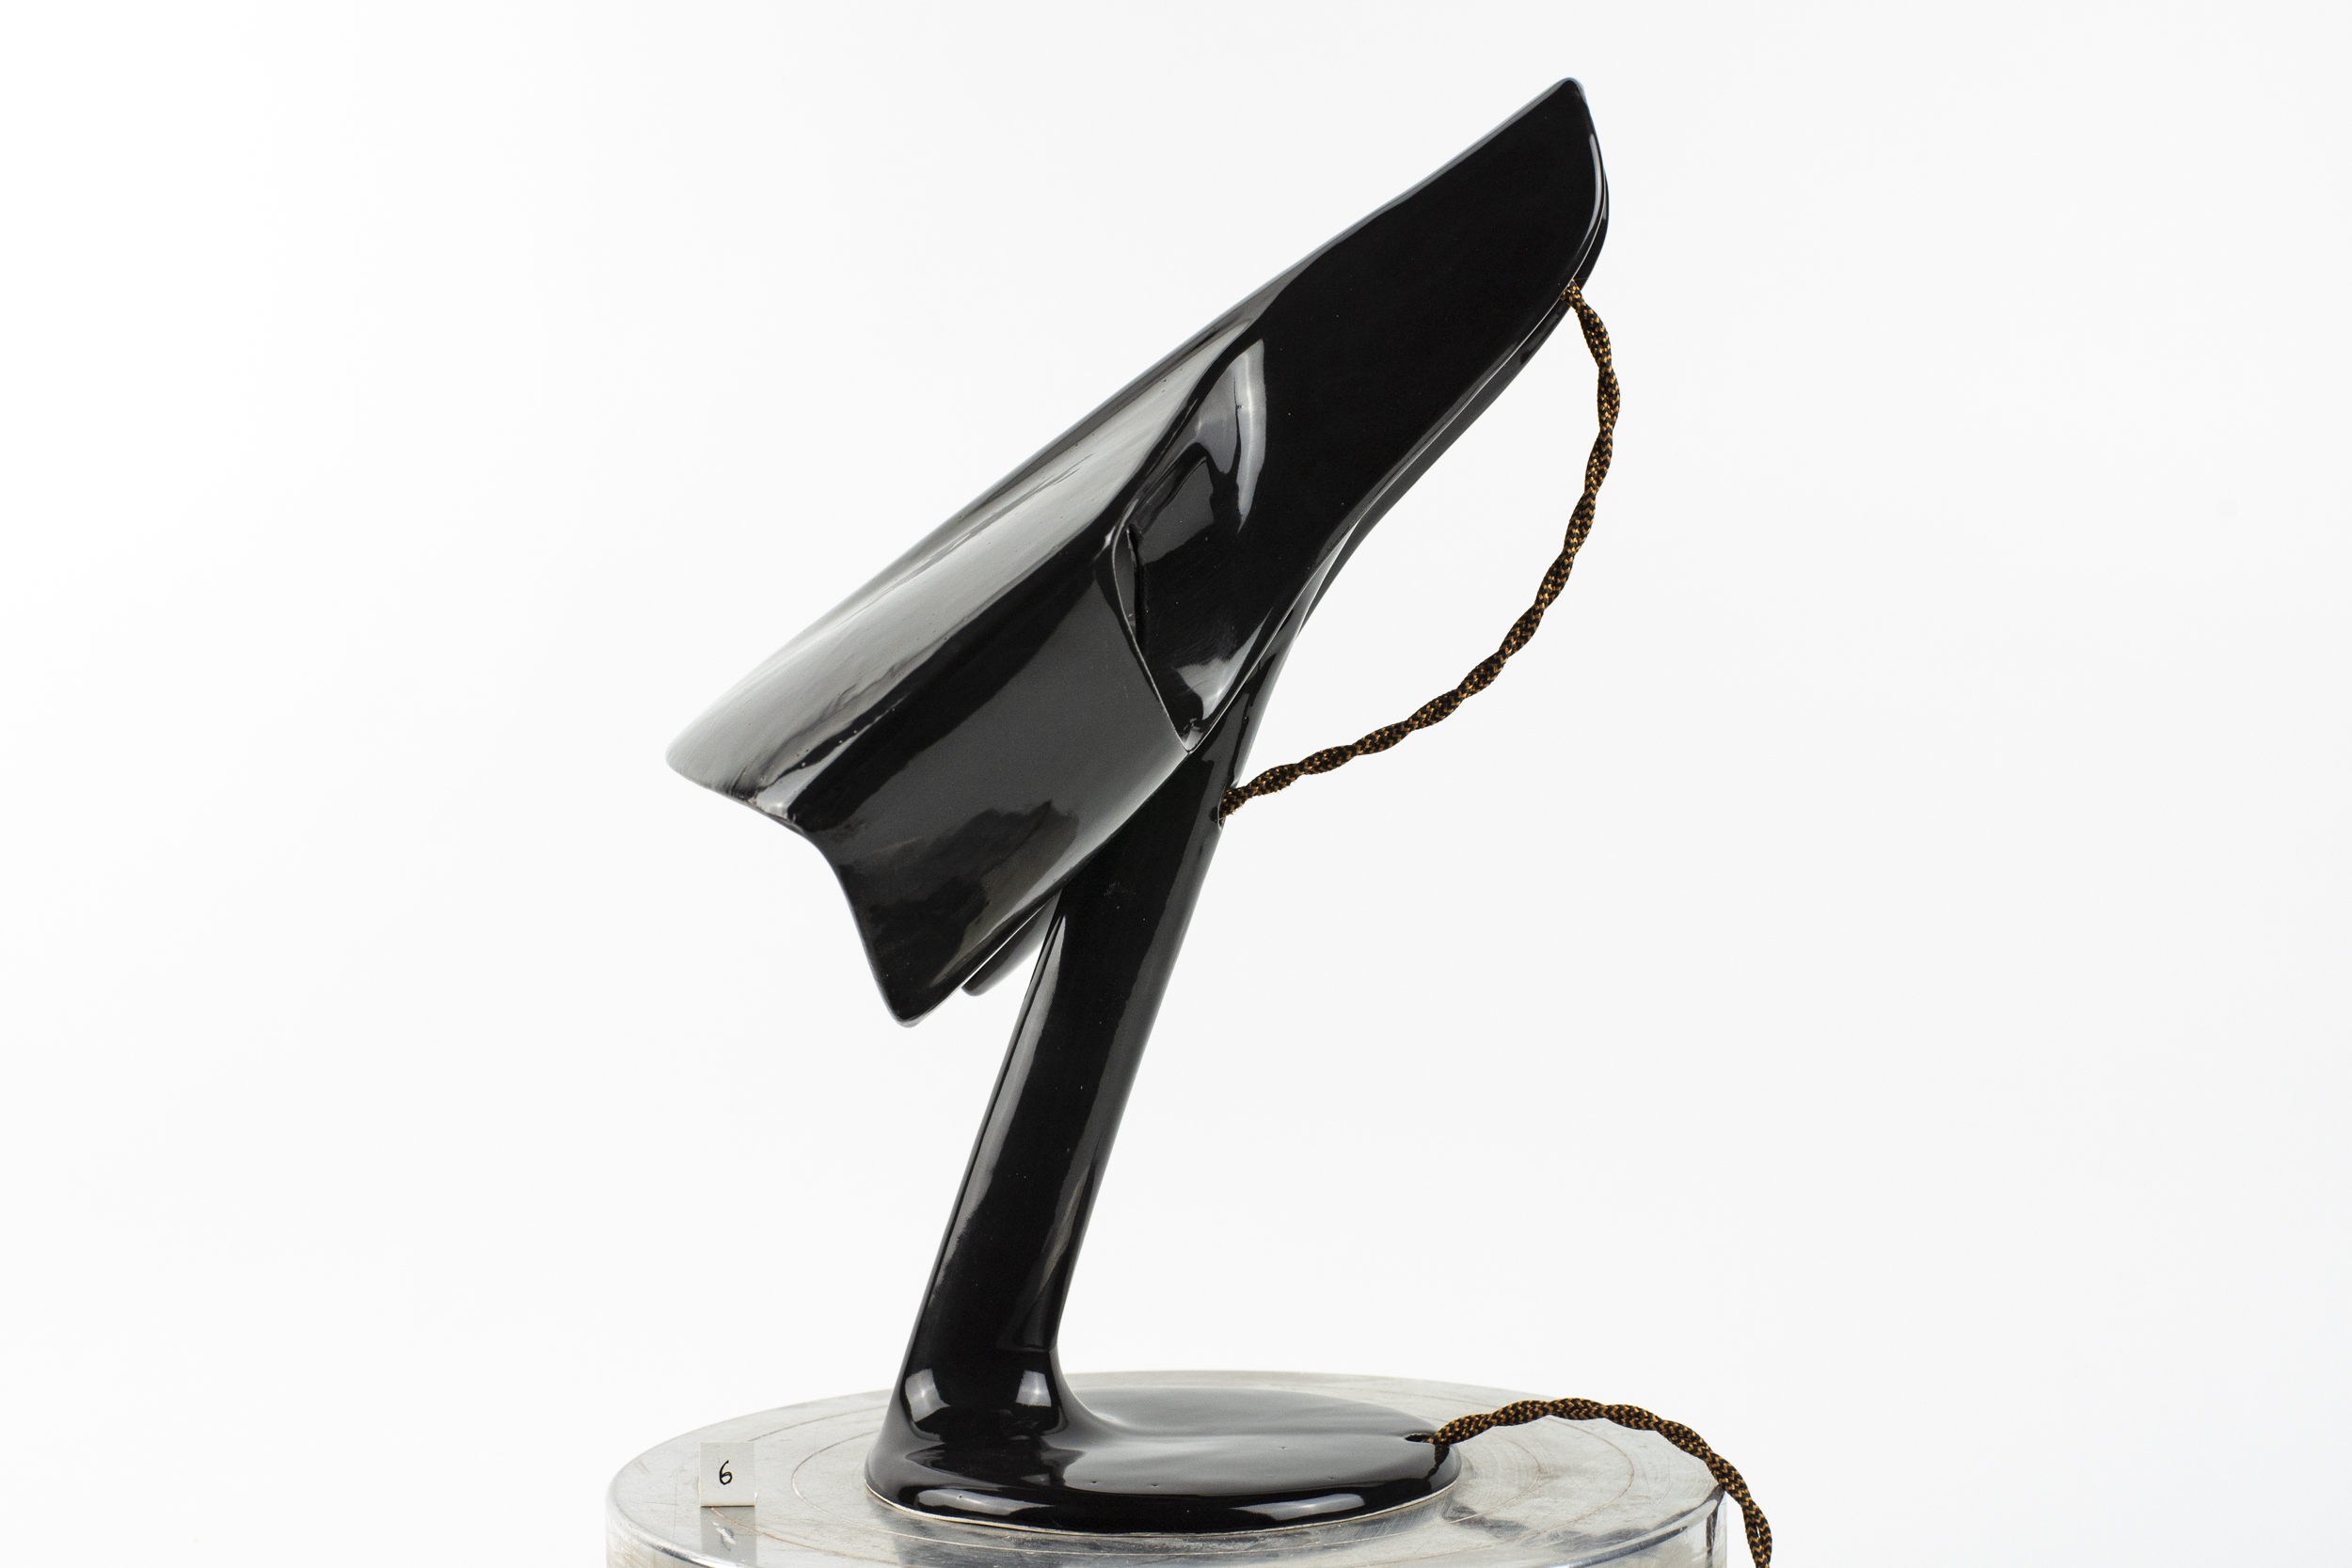 Gallery designer contemporary table lamp